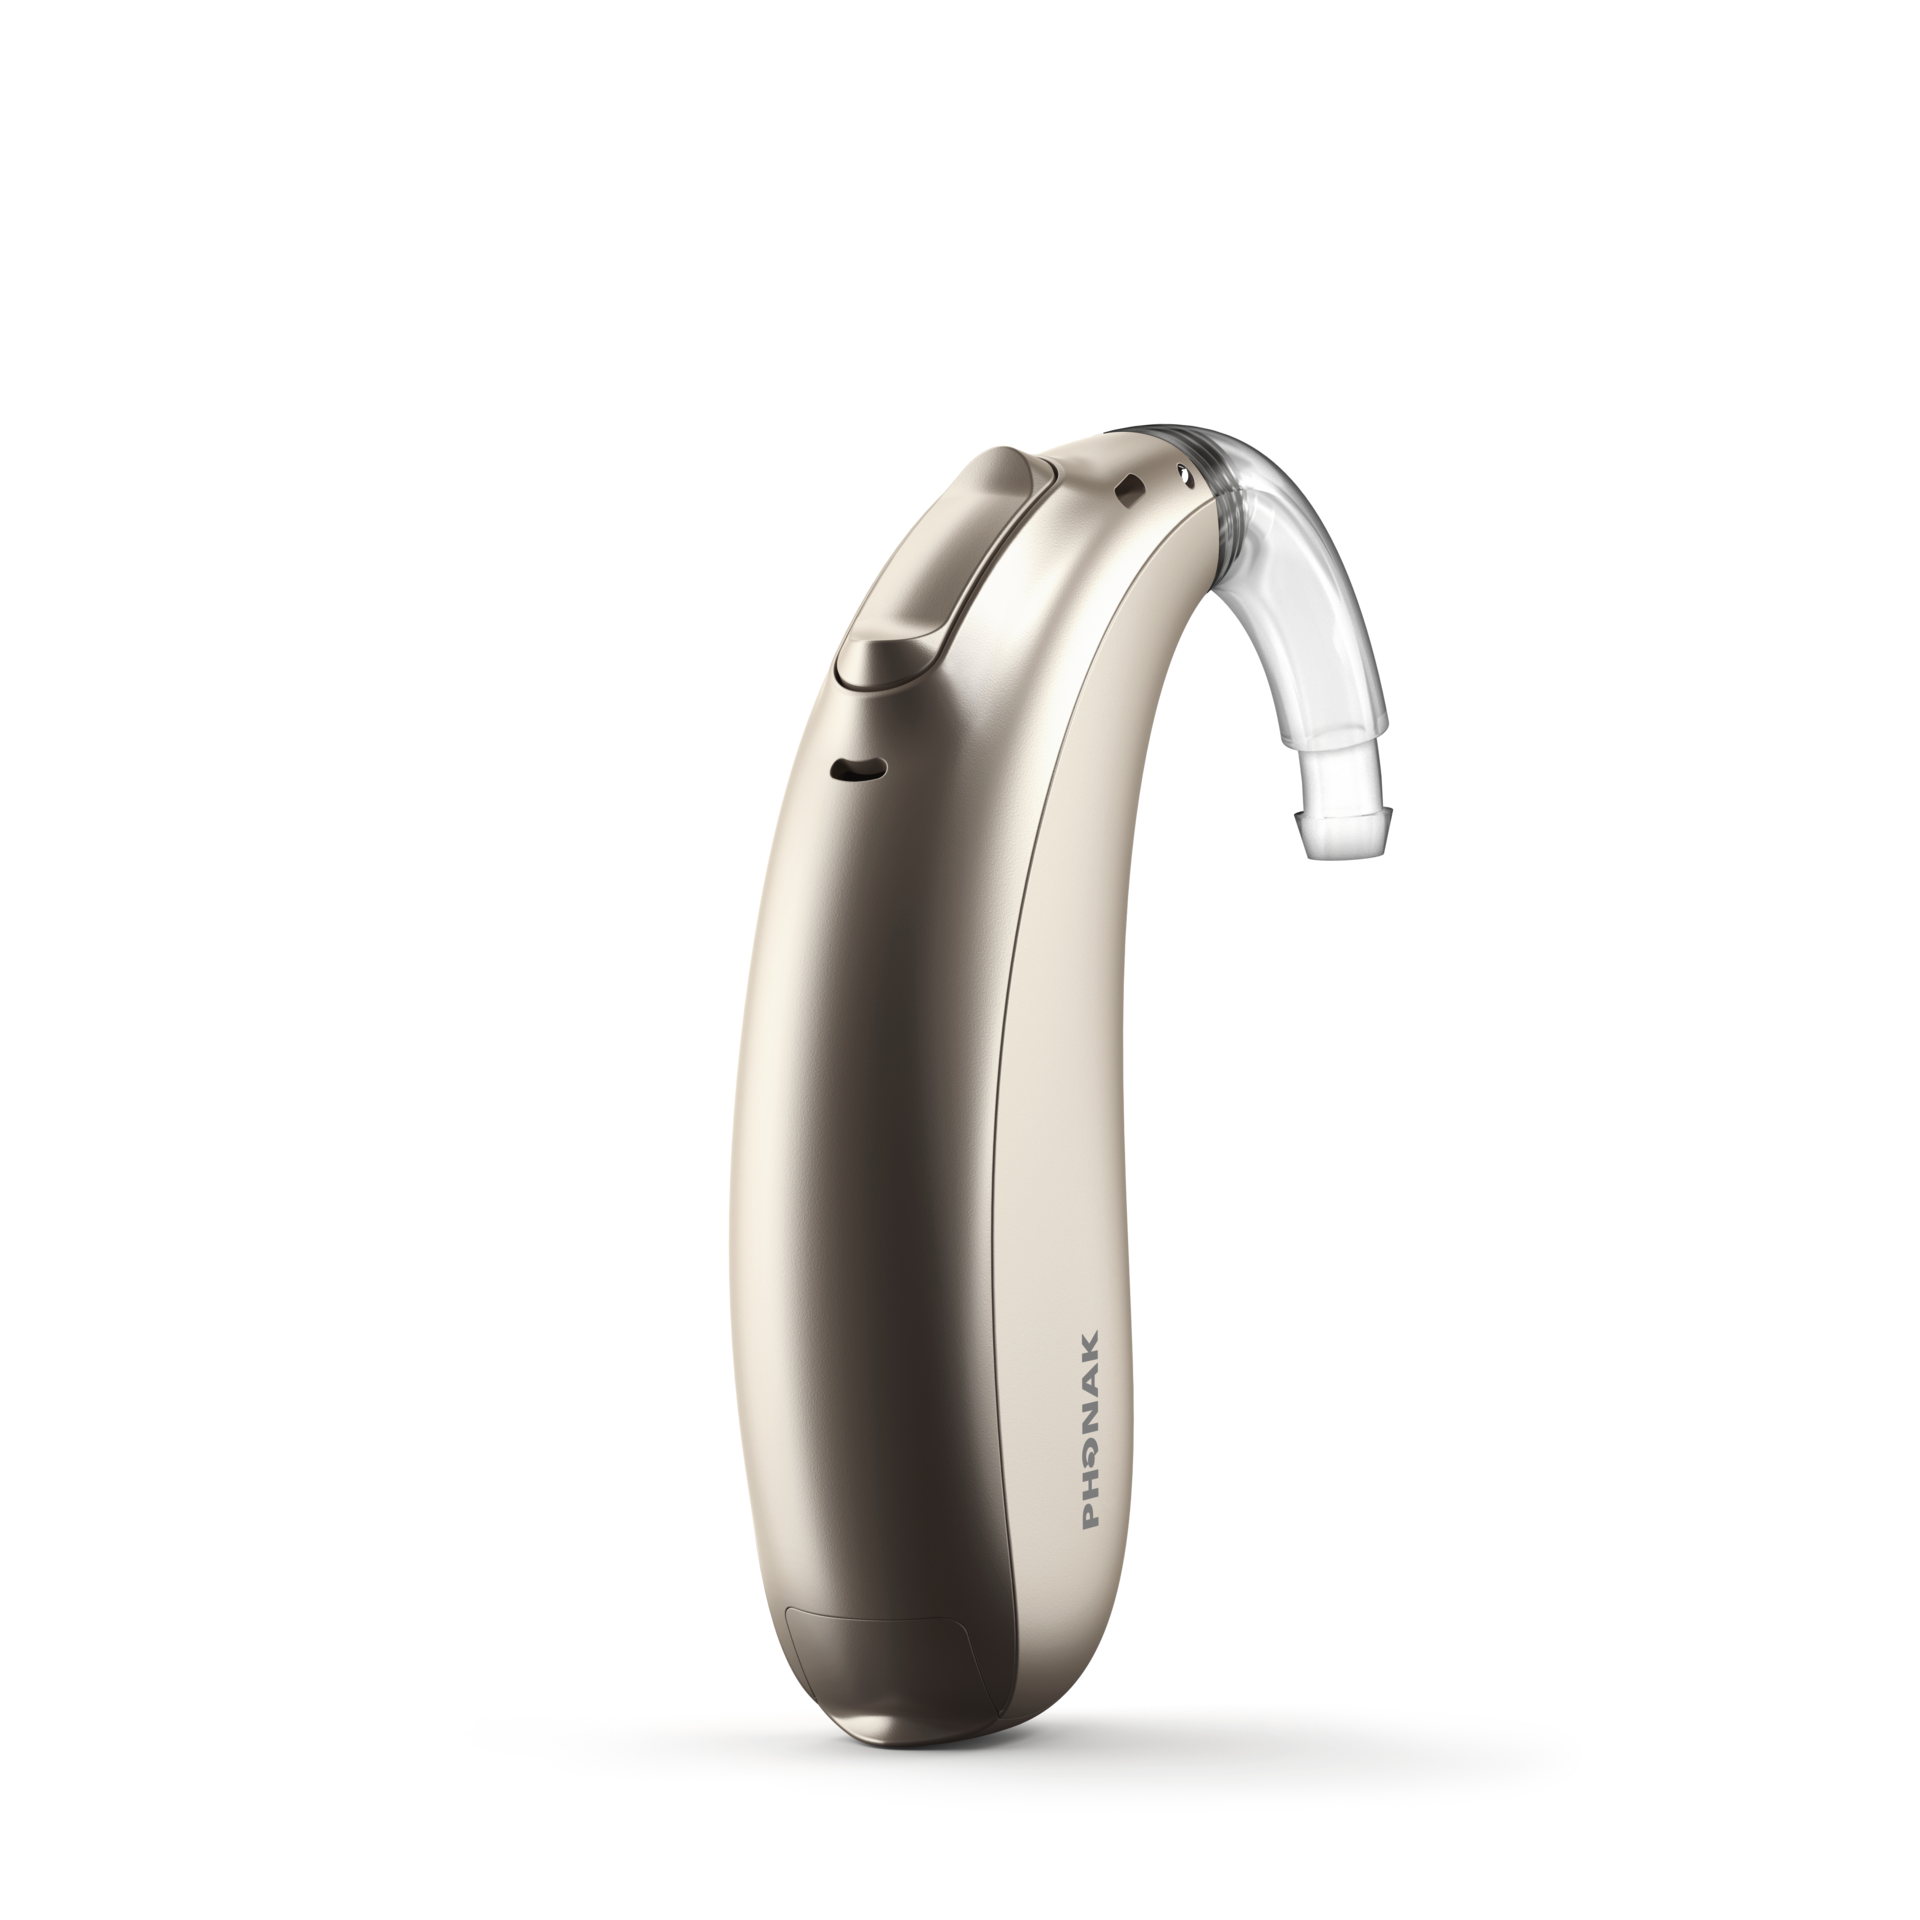 Phonak Naída M-SP hearing aid